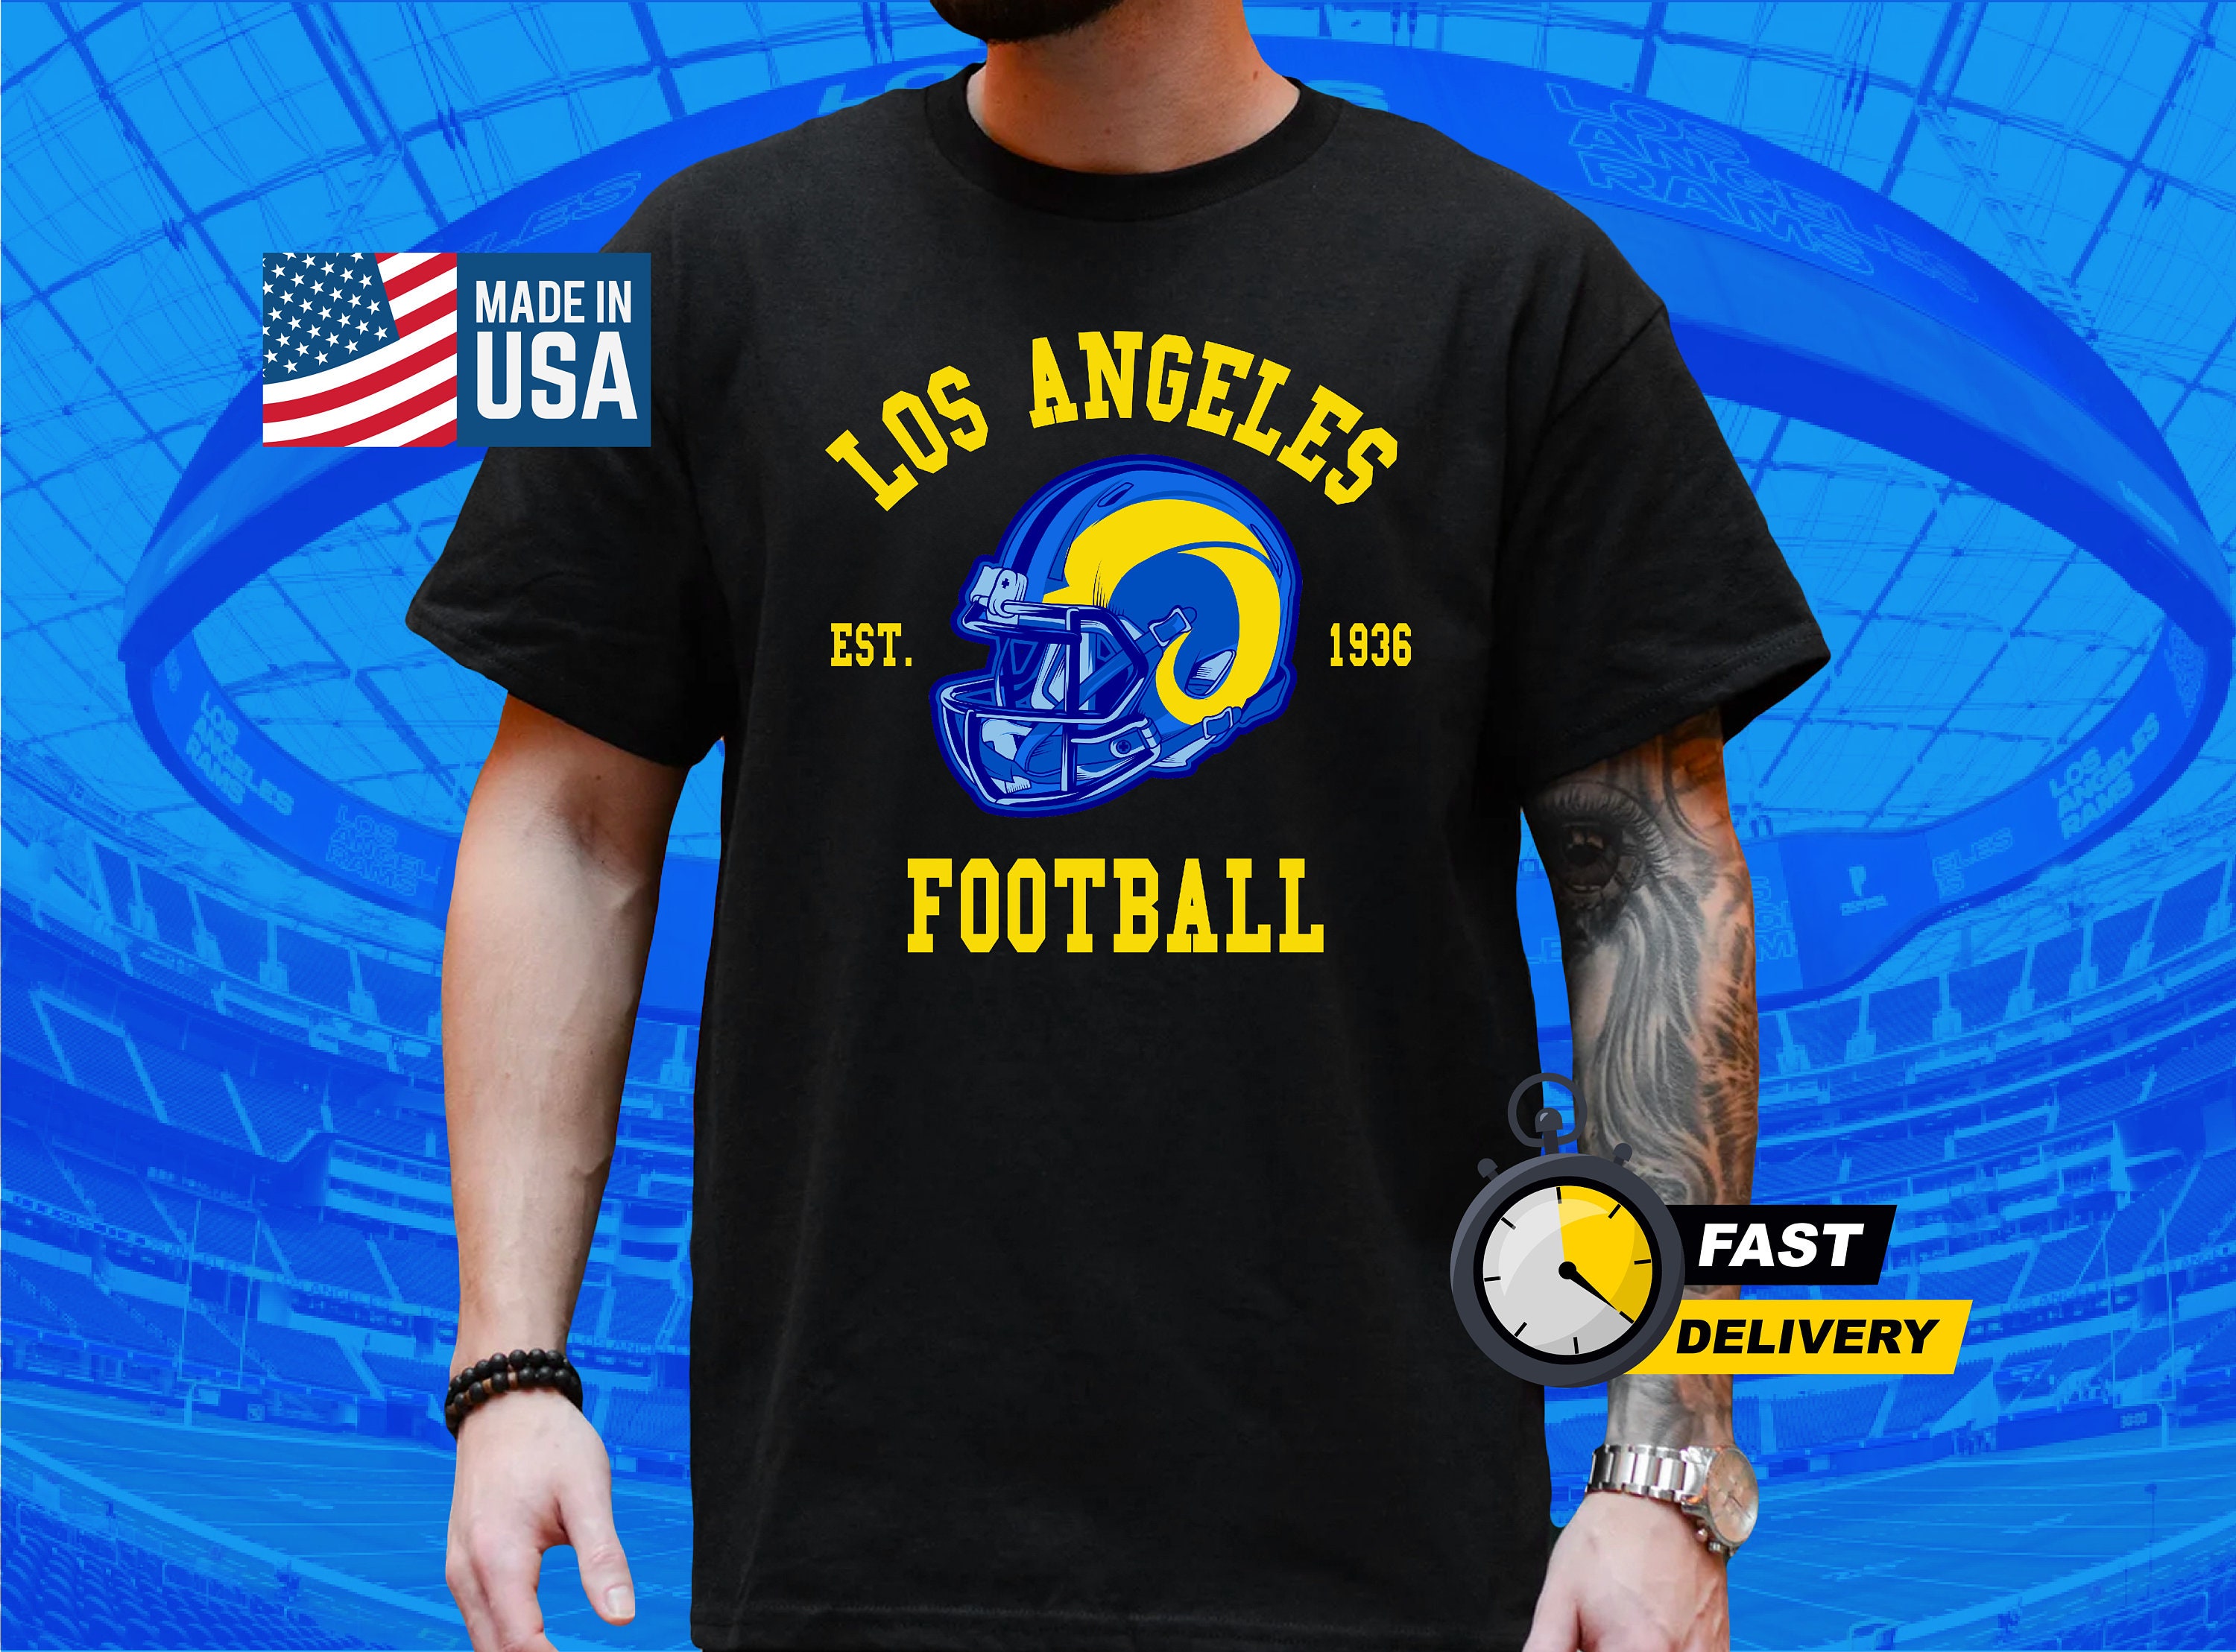 Buy NFC West Champions LA Rams Shirt For Free Shipping CUSTOM XMAS PRODUCT  COMPANY